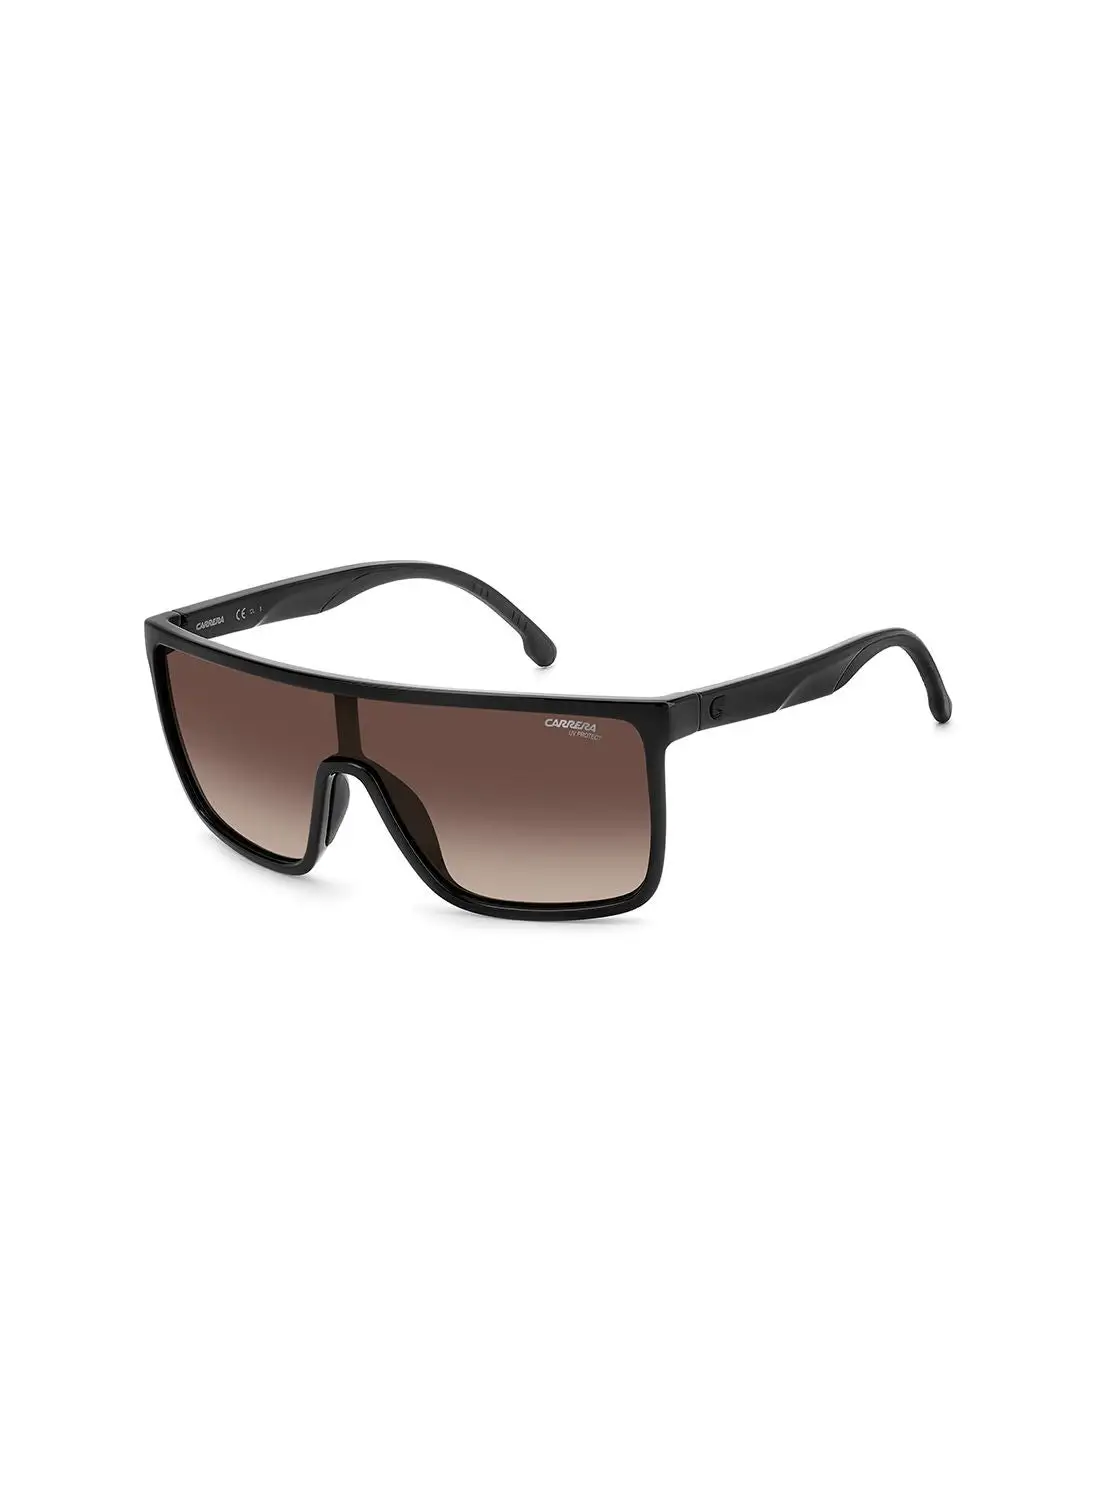 Carrera Unisex UV Protection Sunglasses - Carrera 8060/S Black 99 - Lens Size: 99 Mm